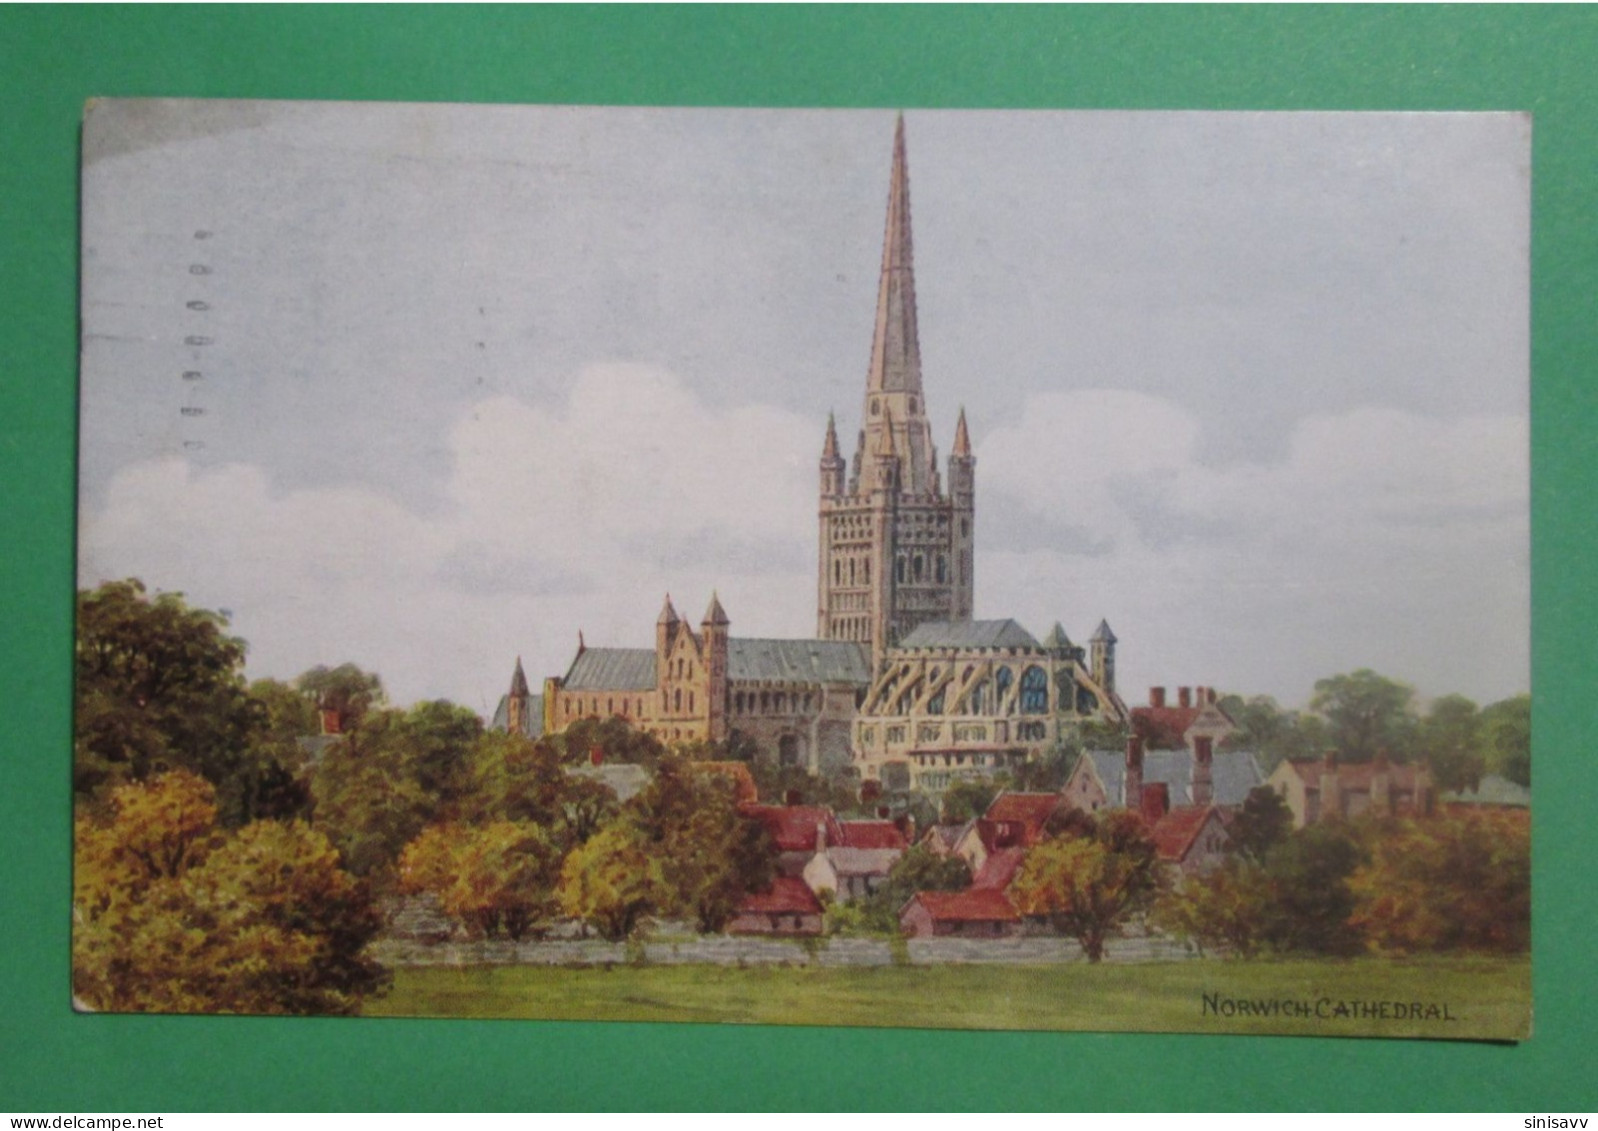 NORWICH / Norwich Cathedral - Norwich